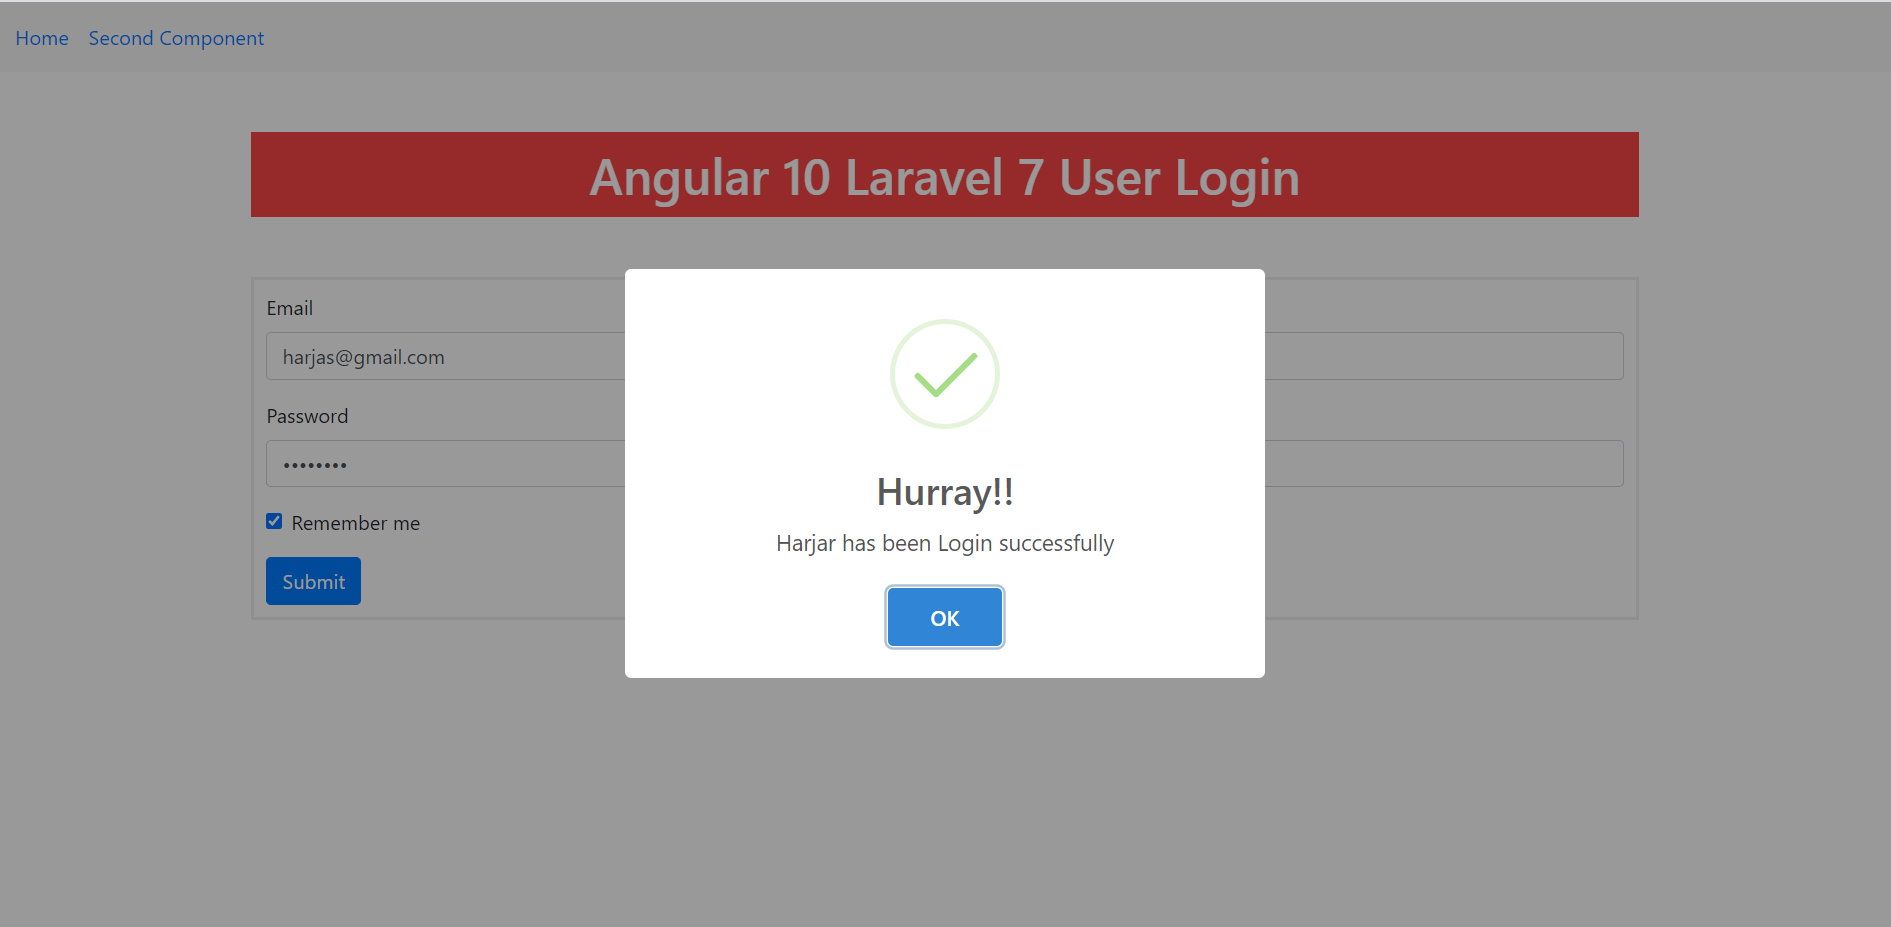 Angular 10 Laravel 7 User Login